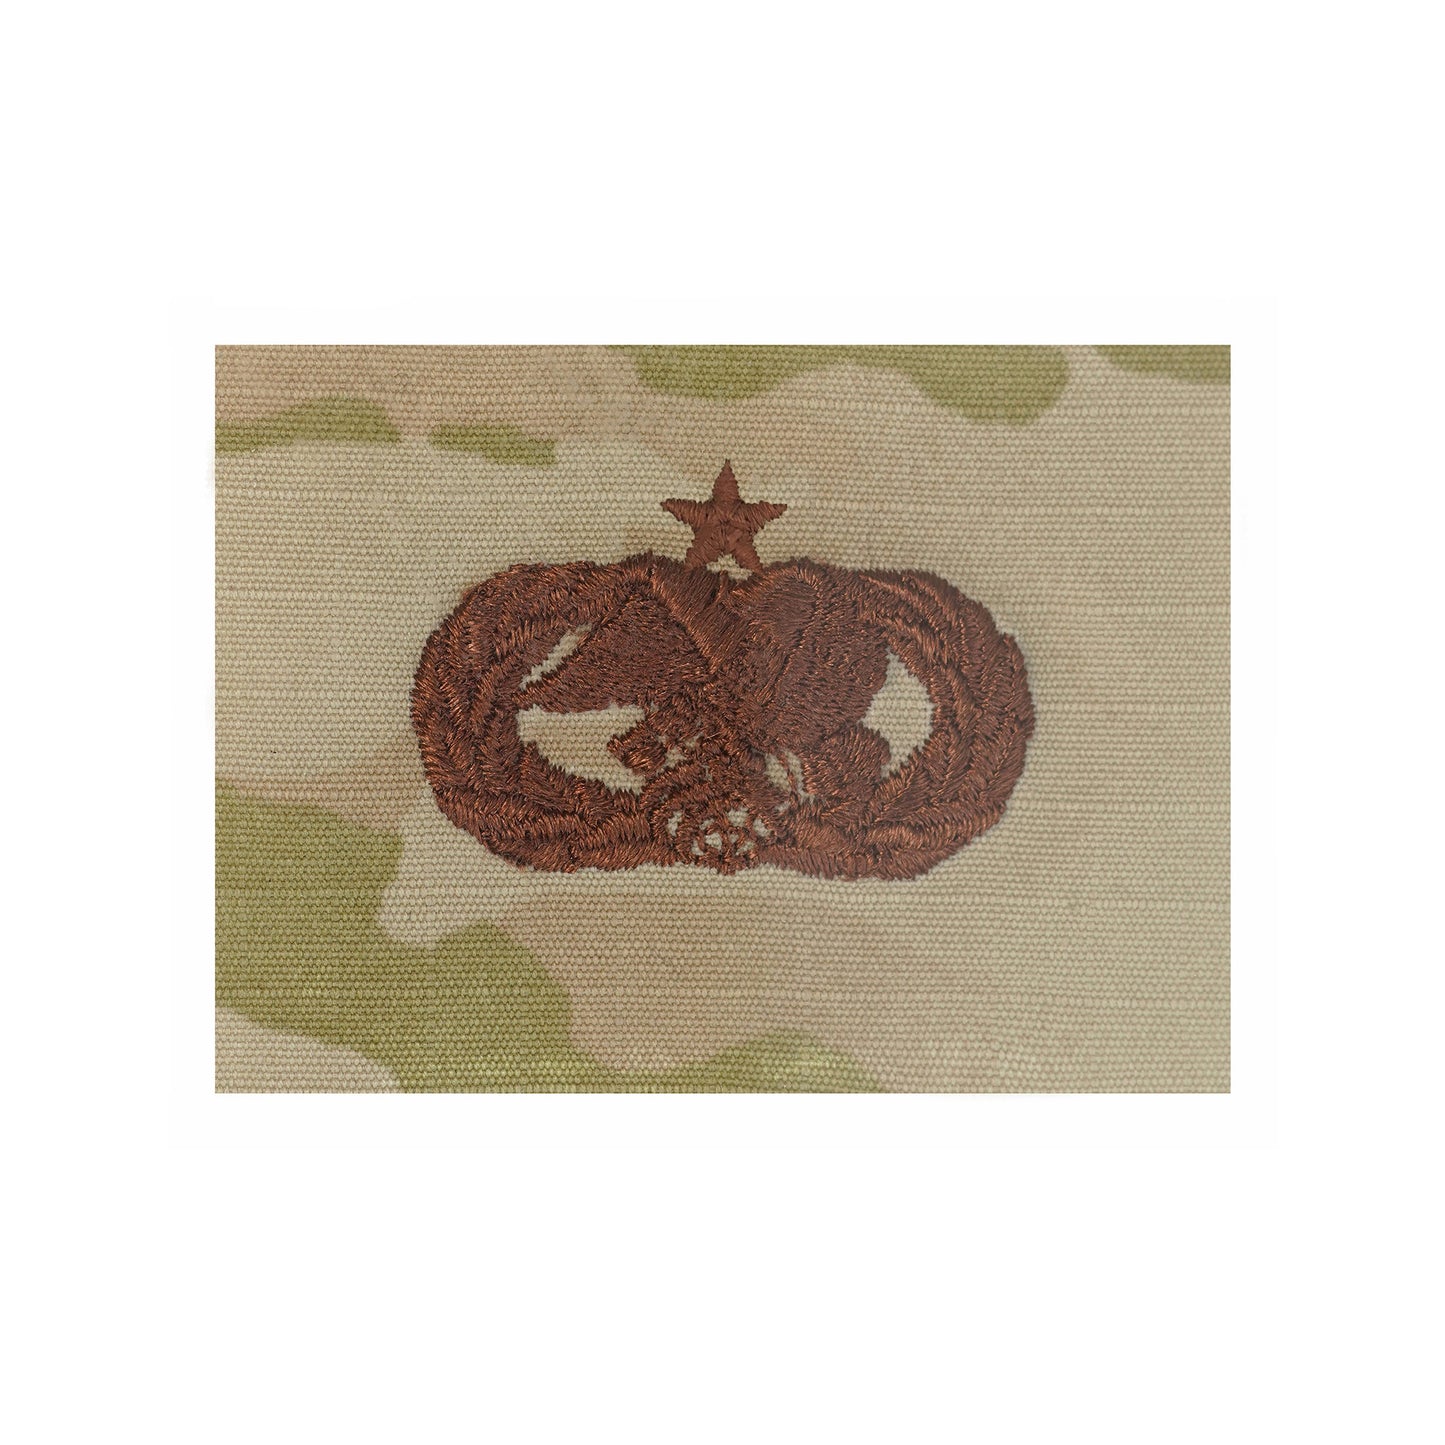 U.S. Air Force Logistics Readiness (Senior) OCP Spice Brown Sew-on Badge